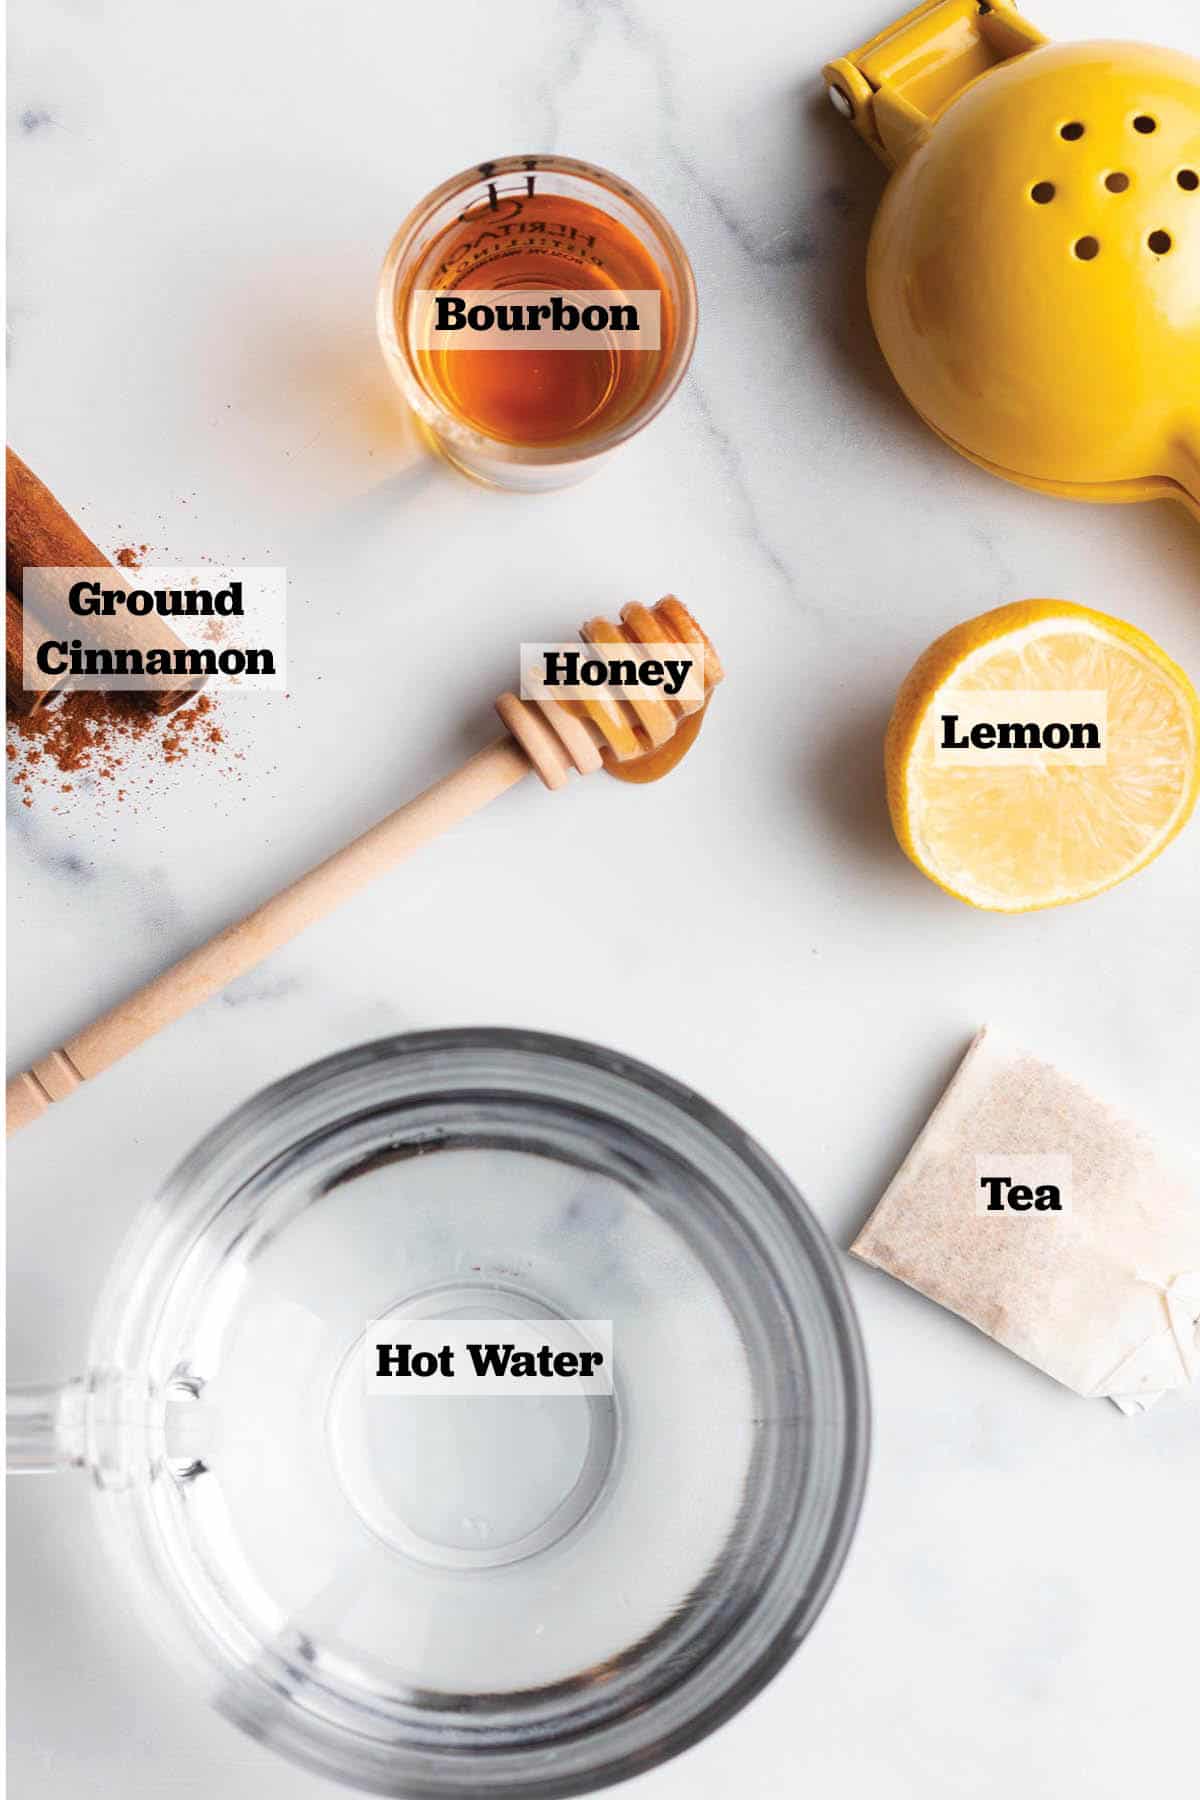 Ingredients to make a tea hot toddy. Hot water, tea bag, lemon, cinnamon, bourbon and honey stick.